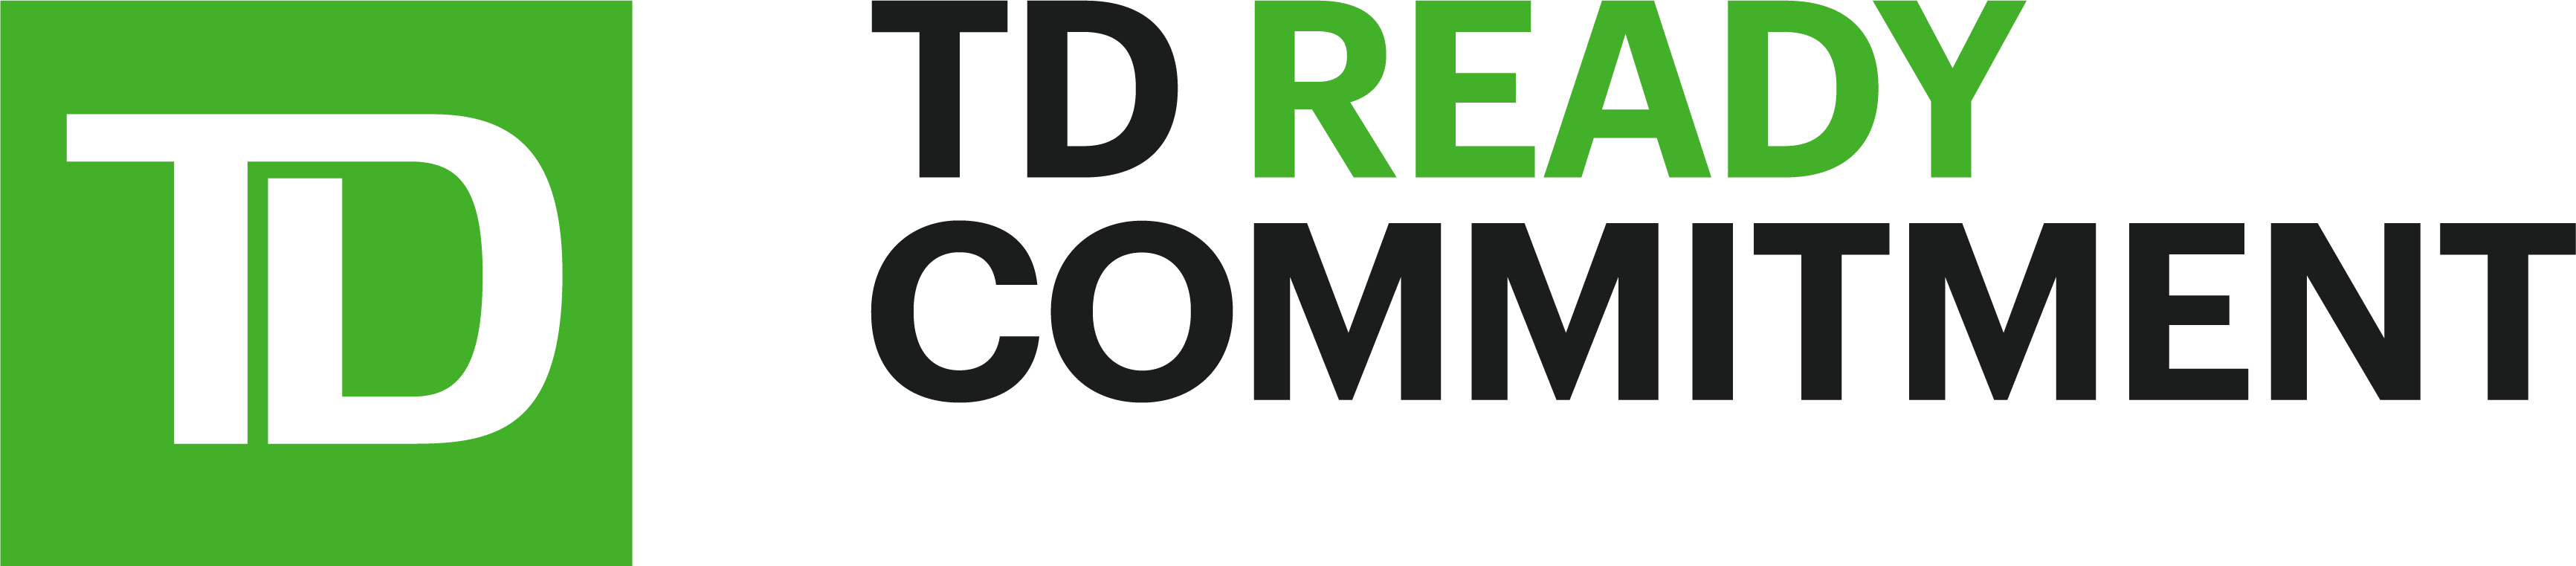 TD Ready Commitment logo 